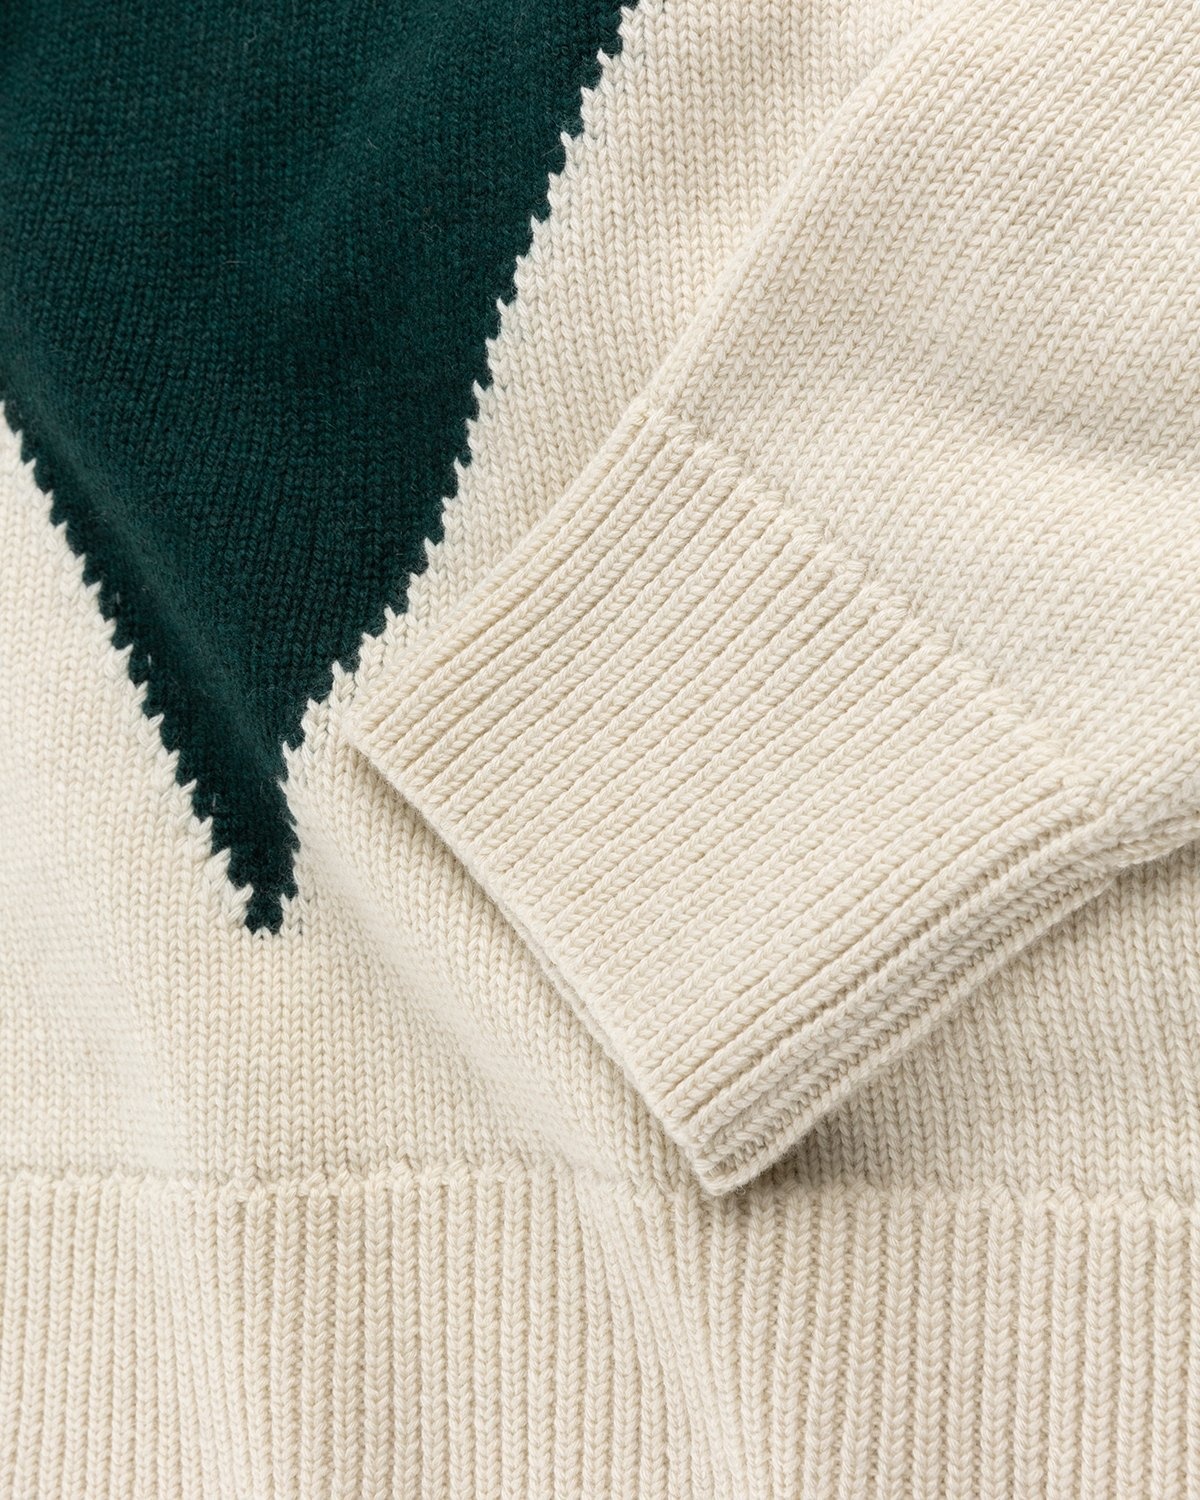 Jil Sander – Cashmere High Neck Knit Sweater Green - Turtlenecks - Green - Image 4